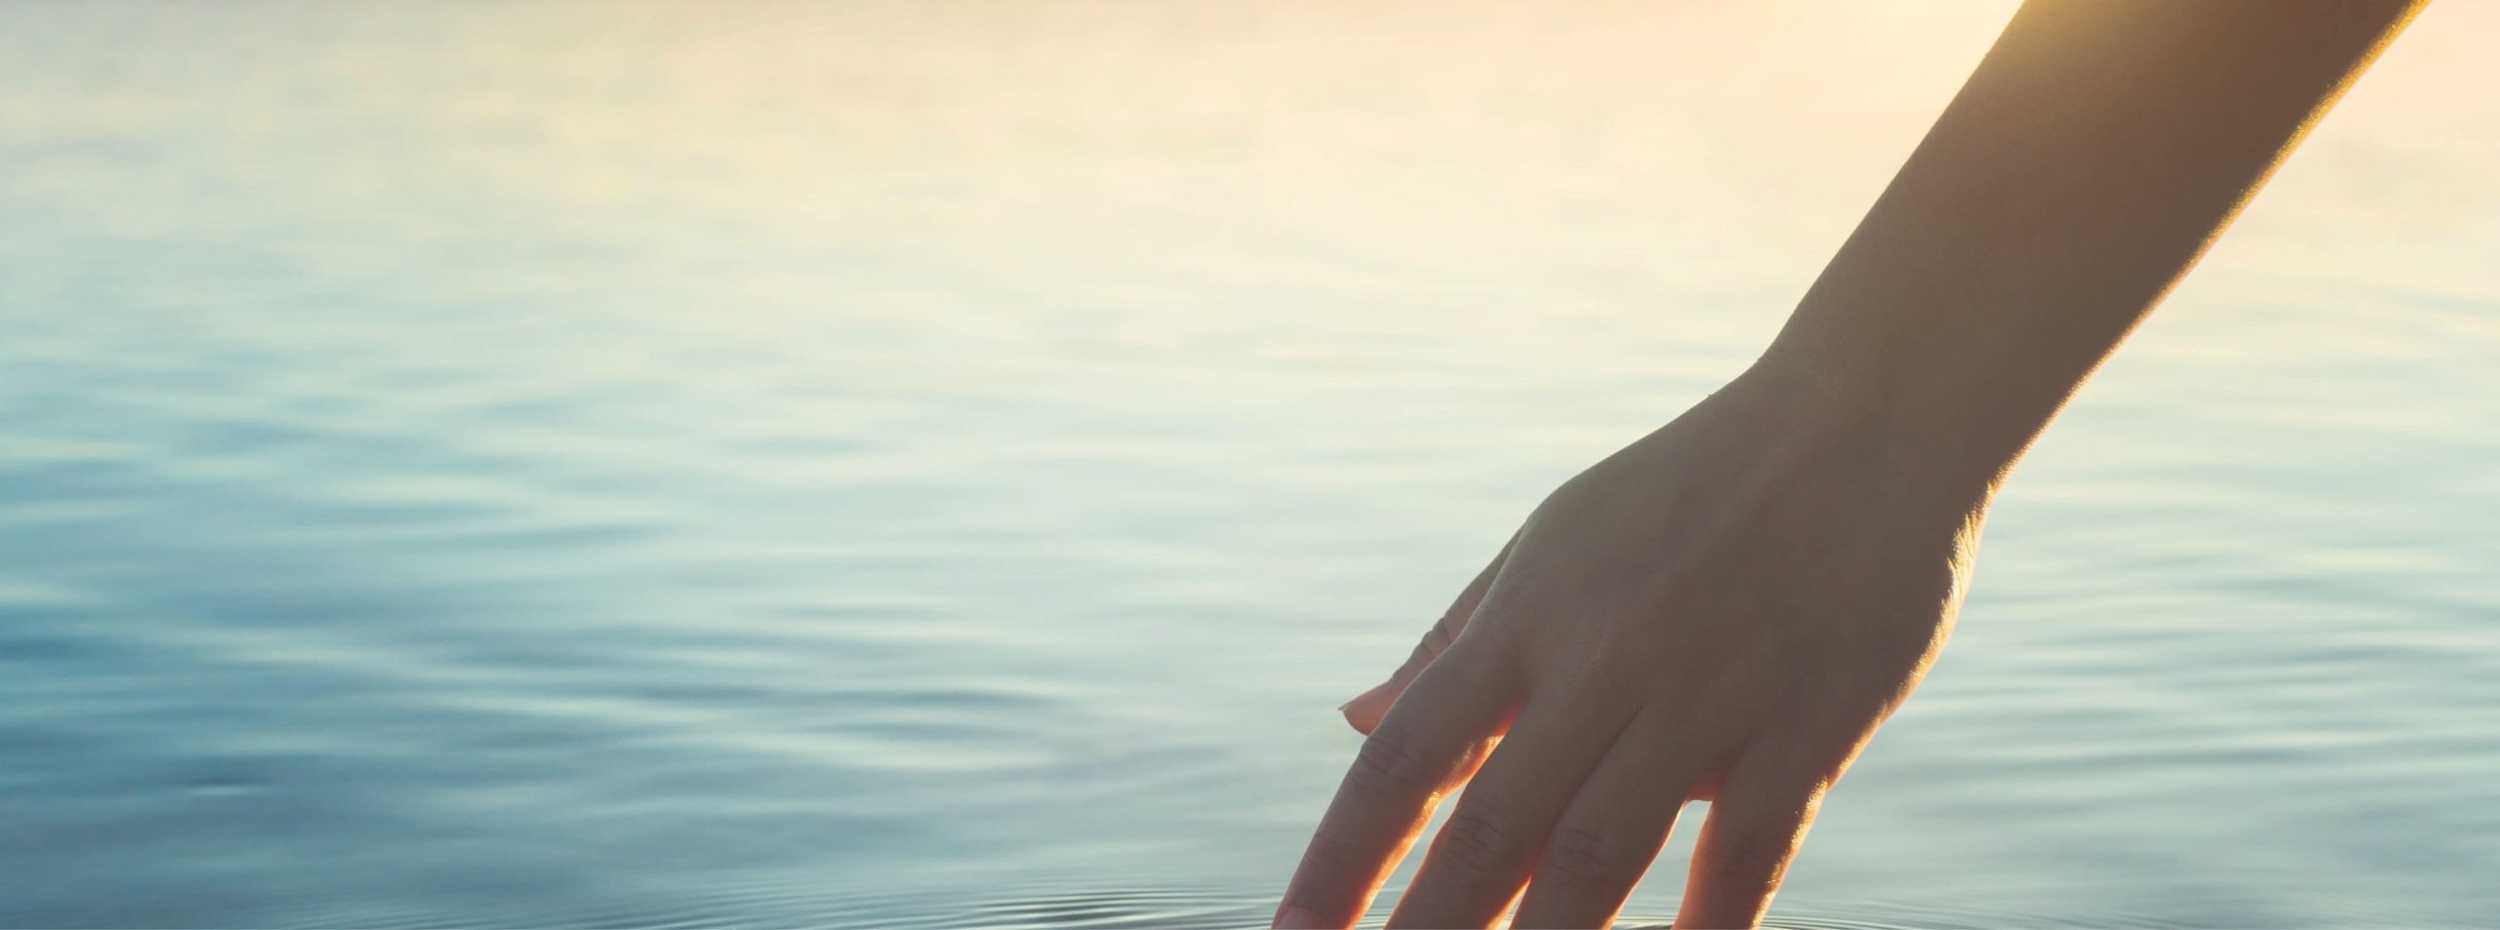 a hand touching a lake Christina Vaillancourt Registered Psychologist